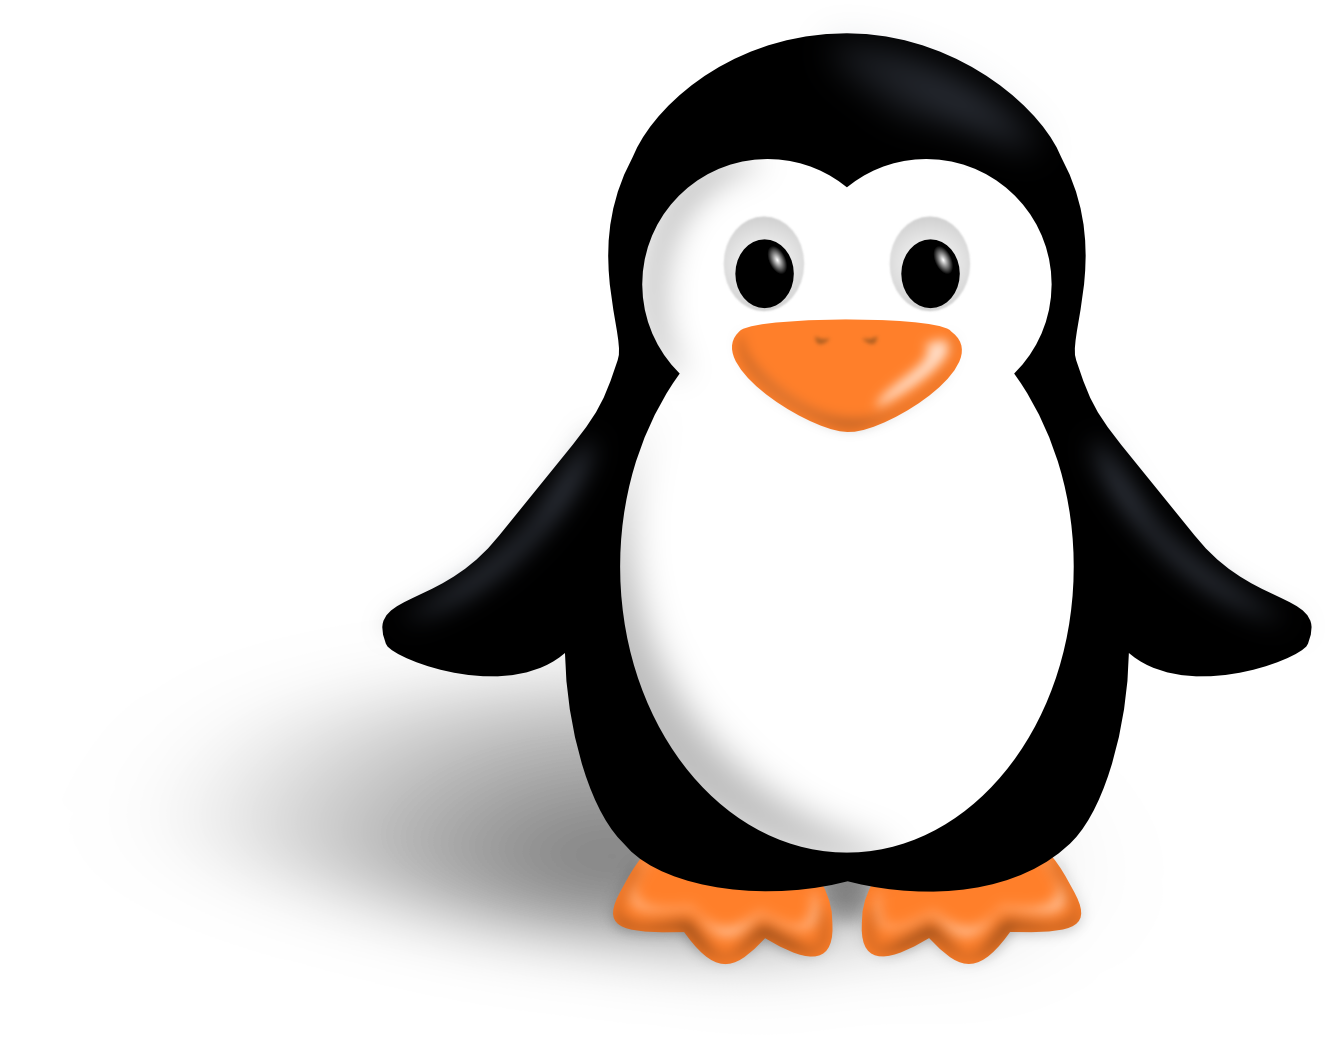 Penguin classic clipart - ClipartFox